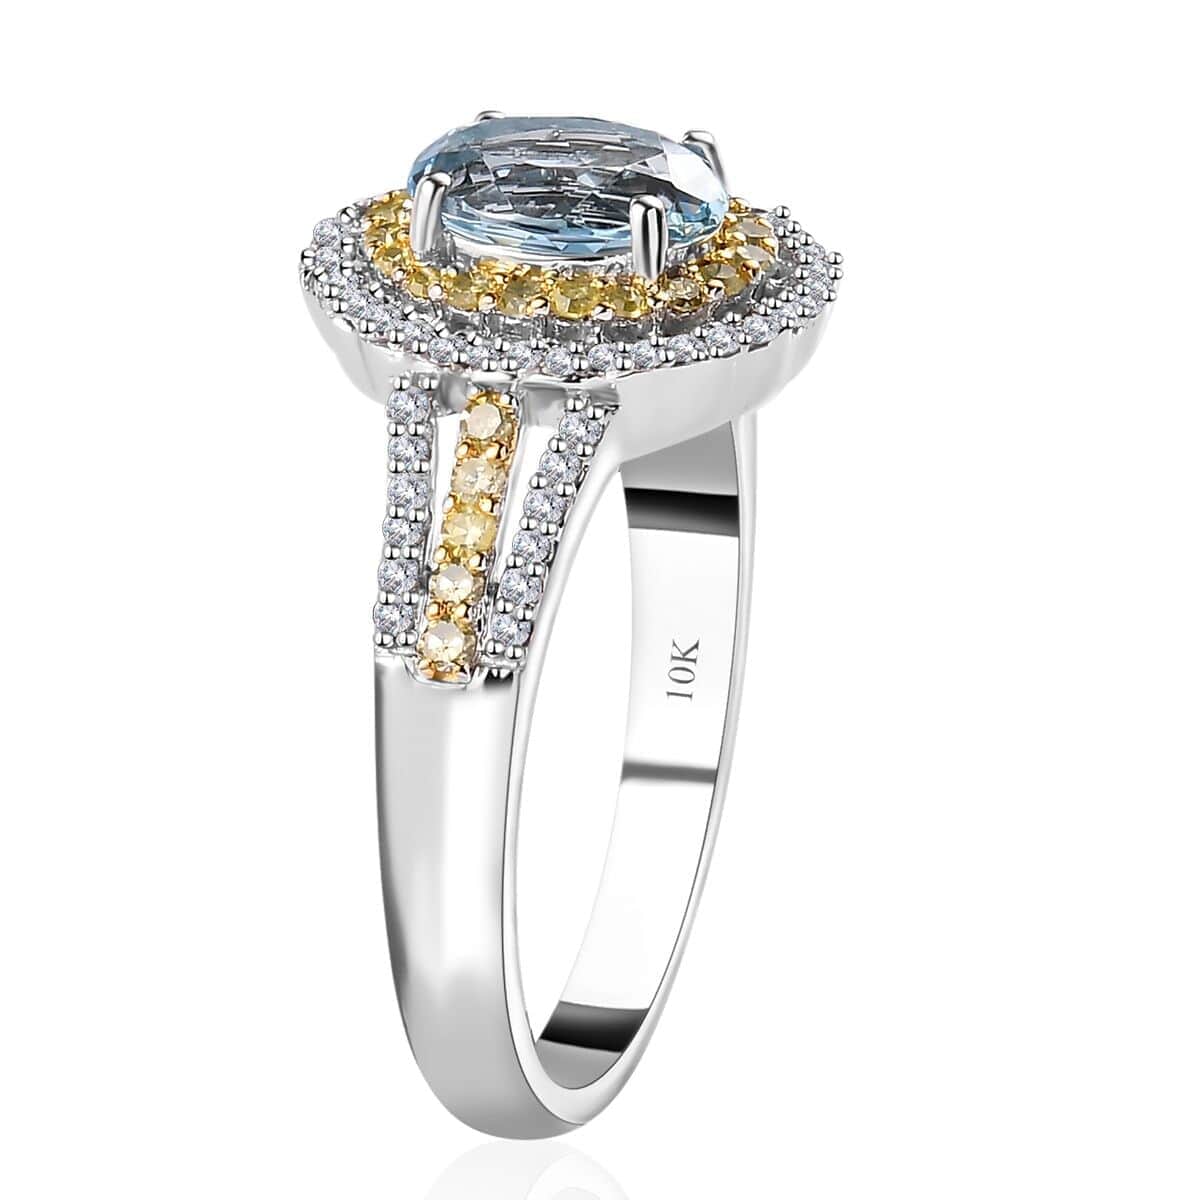 Luxoro 10K White Gold Premium Santa Maria Aquamarine, Natural Yellow and White Diamond I2-I3 Ring (Size 10.0) 4.35 Grams 1.65 ctw image number 3